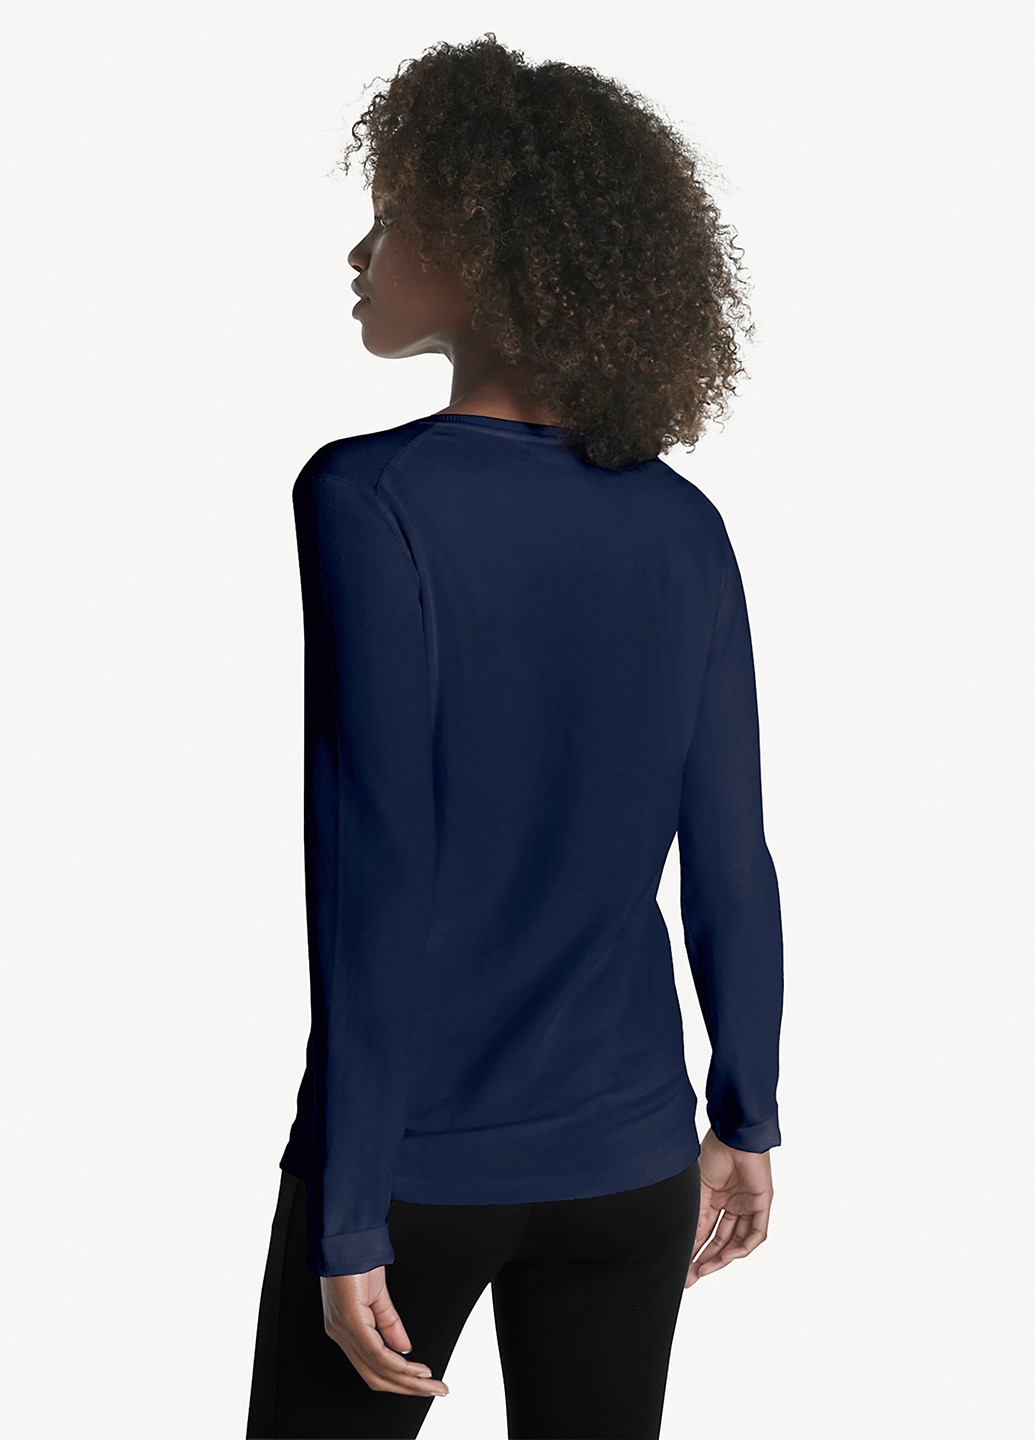 Темно-синий демисезонный пуловер пуловер Tommy Hilfiger